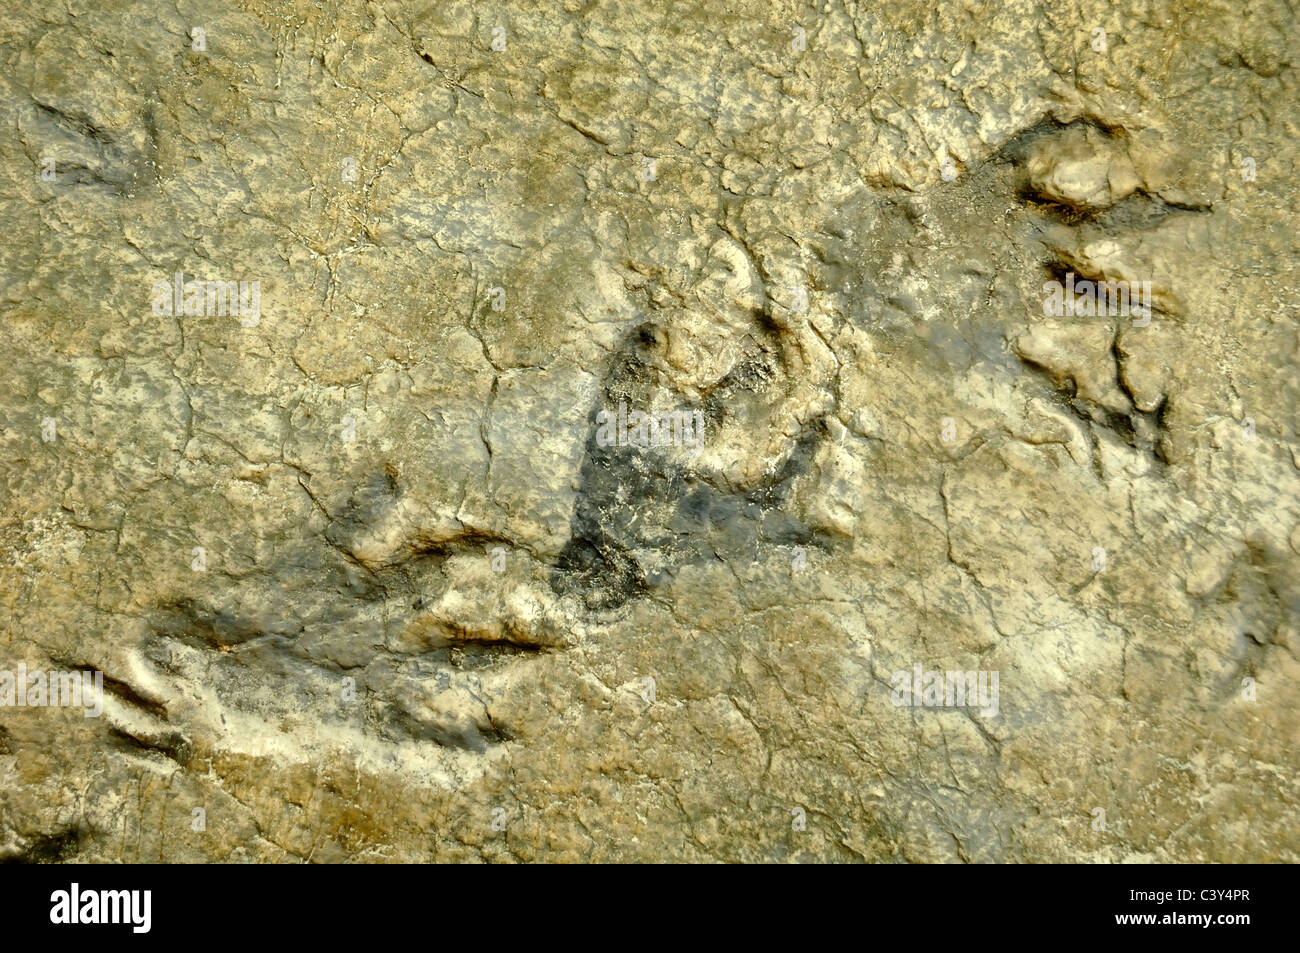 Plateosaurus Dinosaur Fossilized Footprints, Footprint or Tracks from the Gard Département France Stock Photo